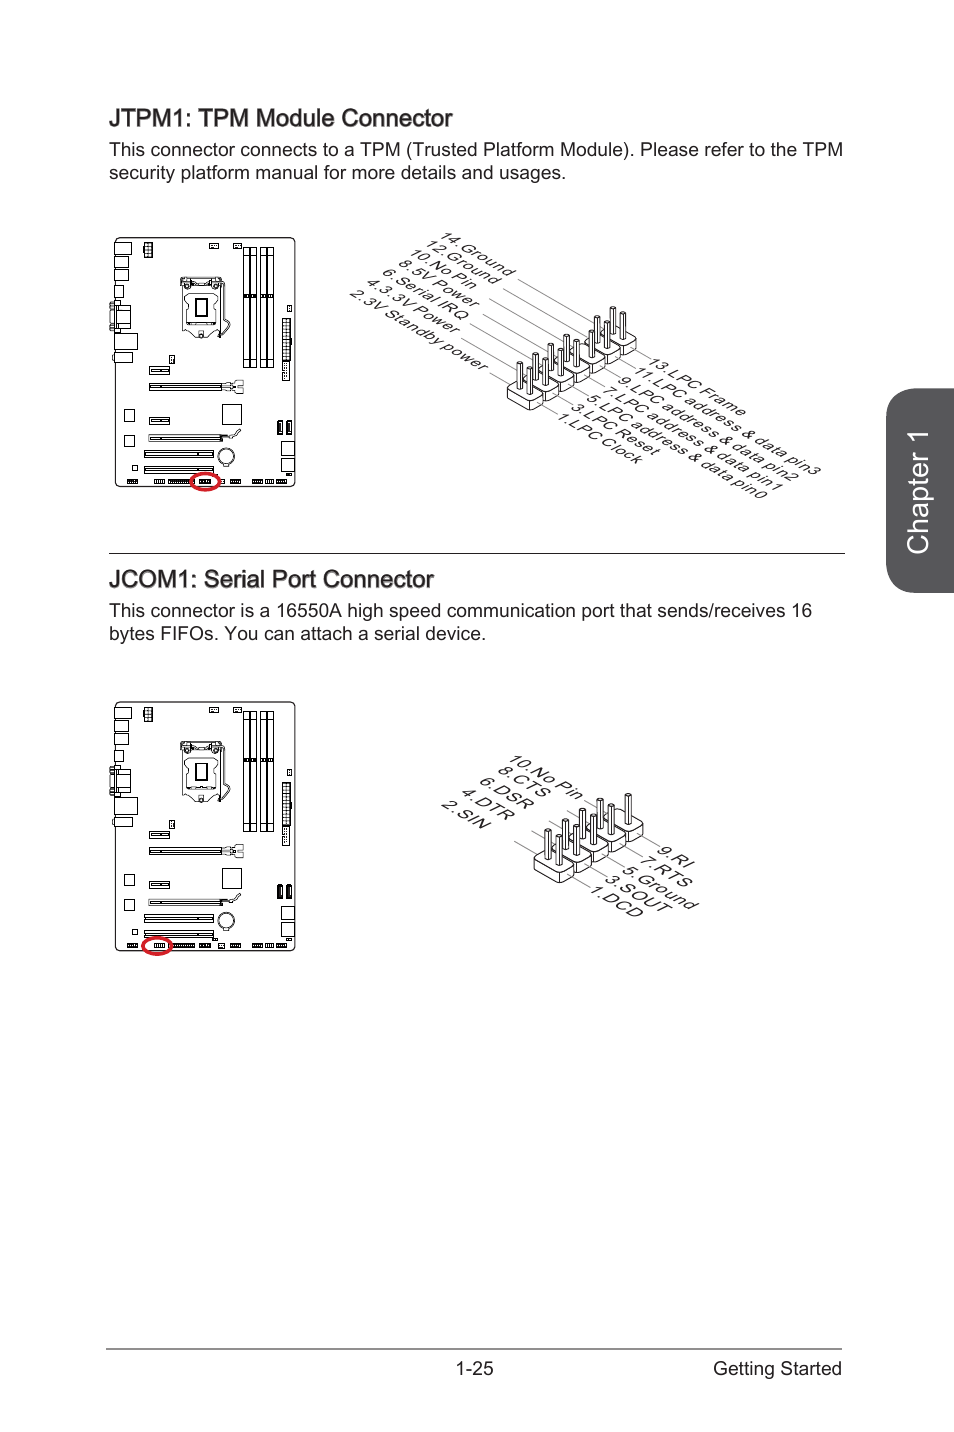 Jcom1, Serial port connector, Jtpm1 | MSI Z97 PC MATE User Manual